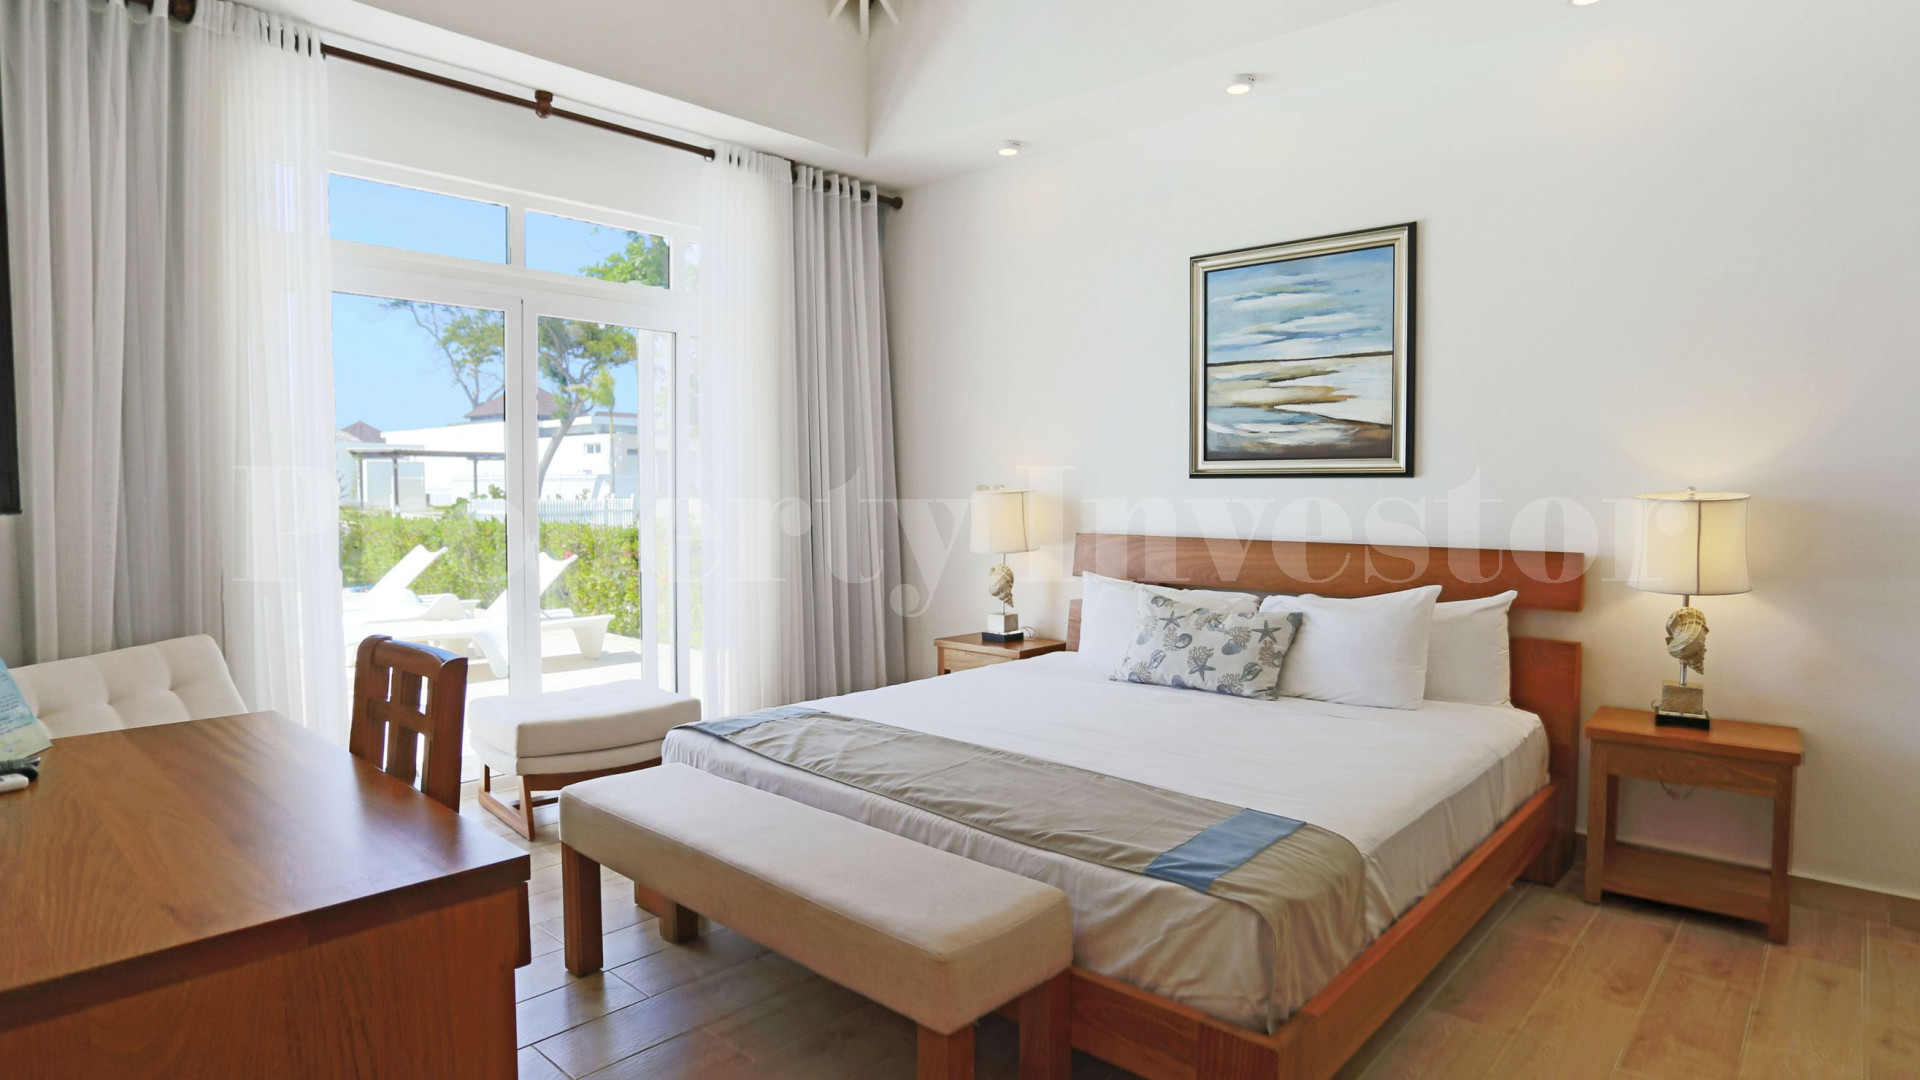 3 Bedroom Oceanview Villa in the Dominican Republic with 30 Year Financing (Villa 15)